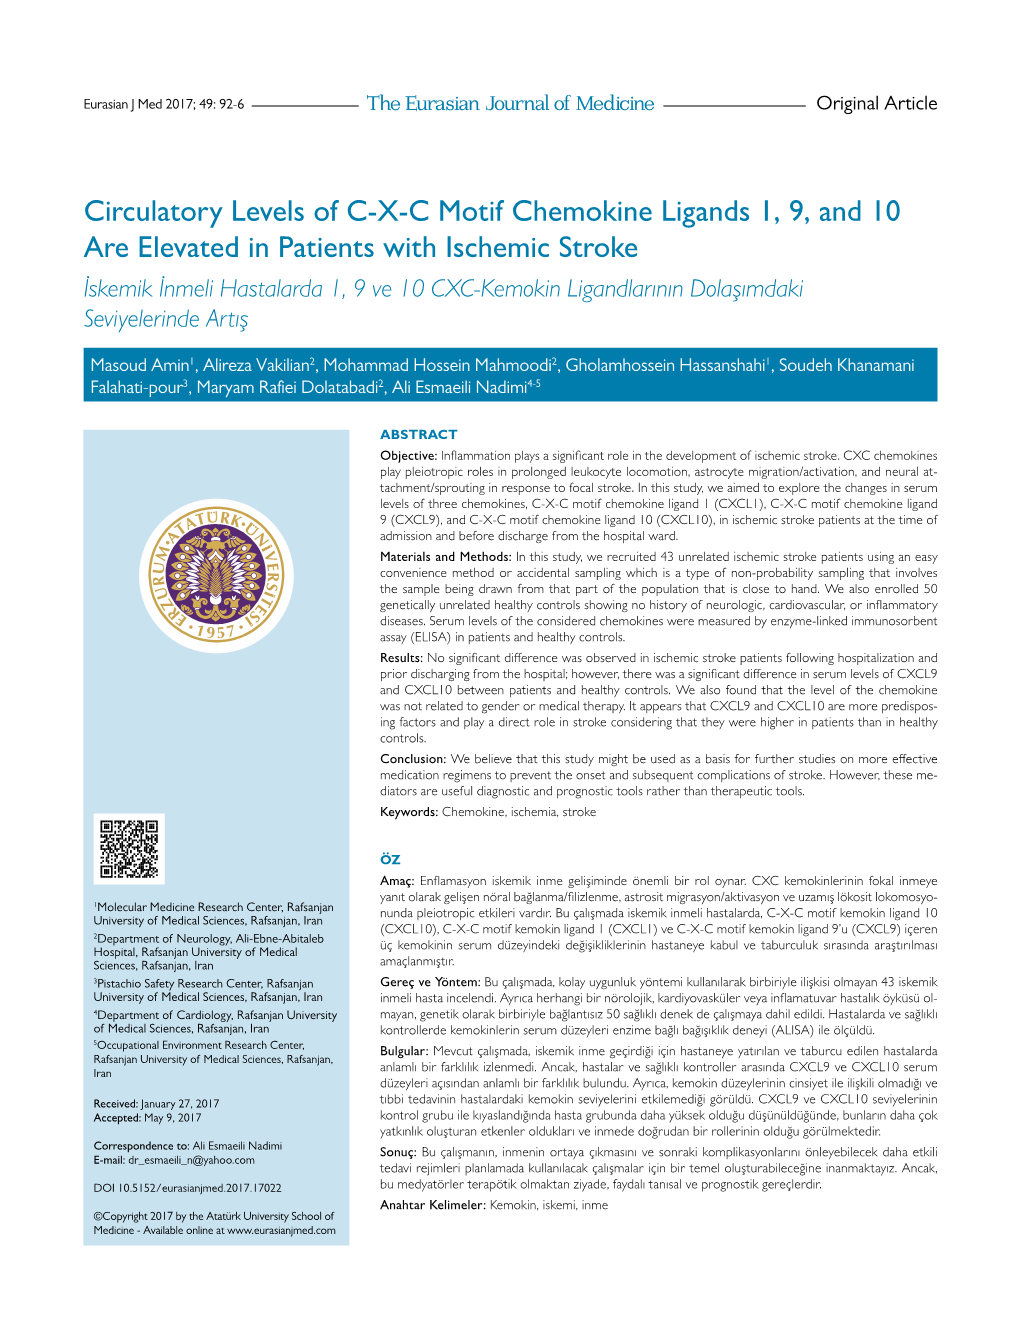 Circulatory Levels of C-X-C Motif Chemokine Ligands 1, 9, and 10